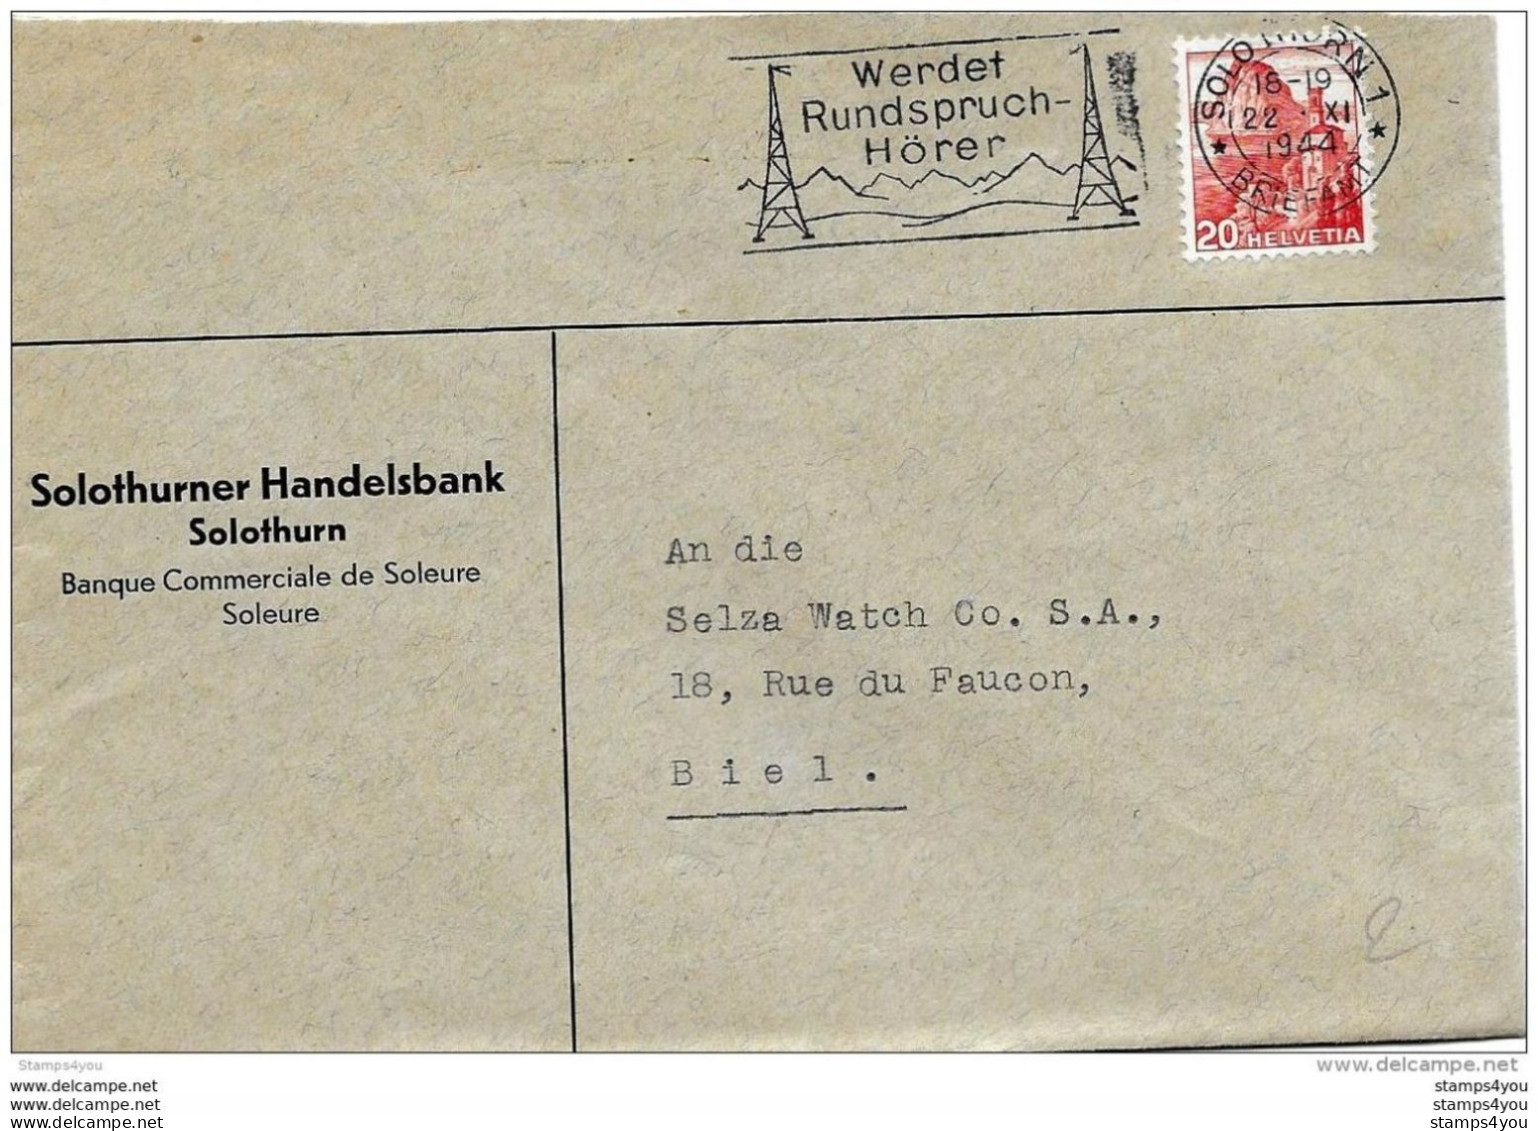 76 - 32 - Enveloppe Avec Oblit Mécanique "Werdet Rundspruch Hörer" 1944 - Marcofilia